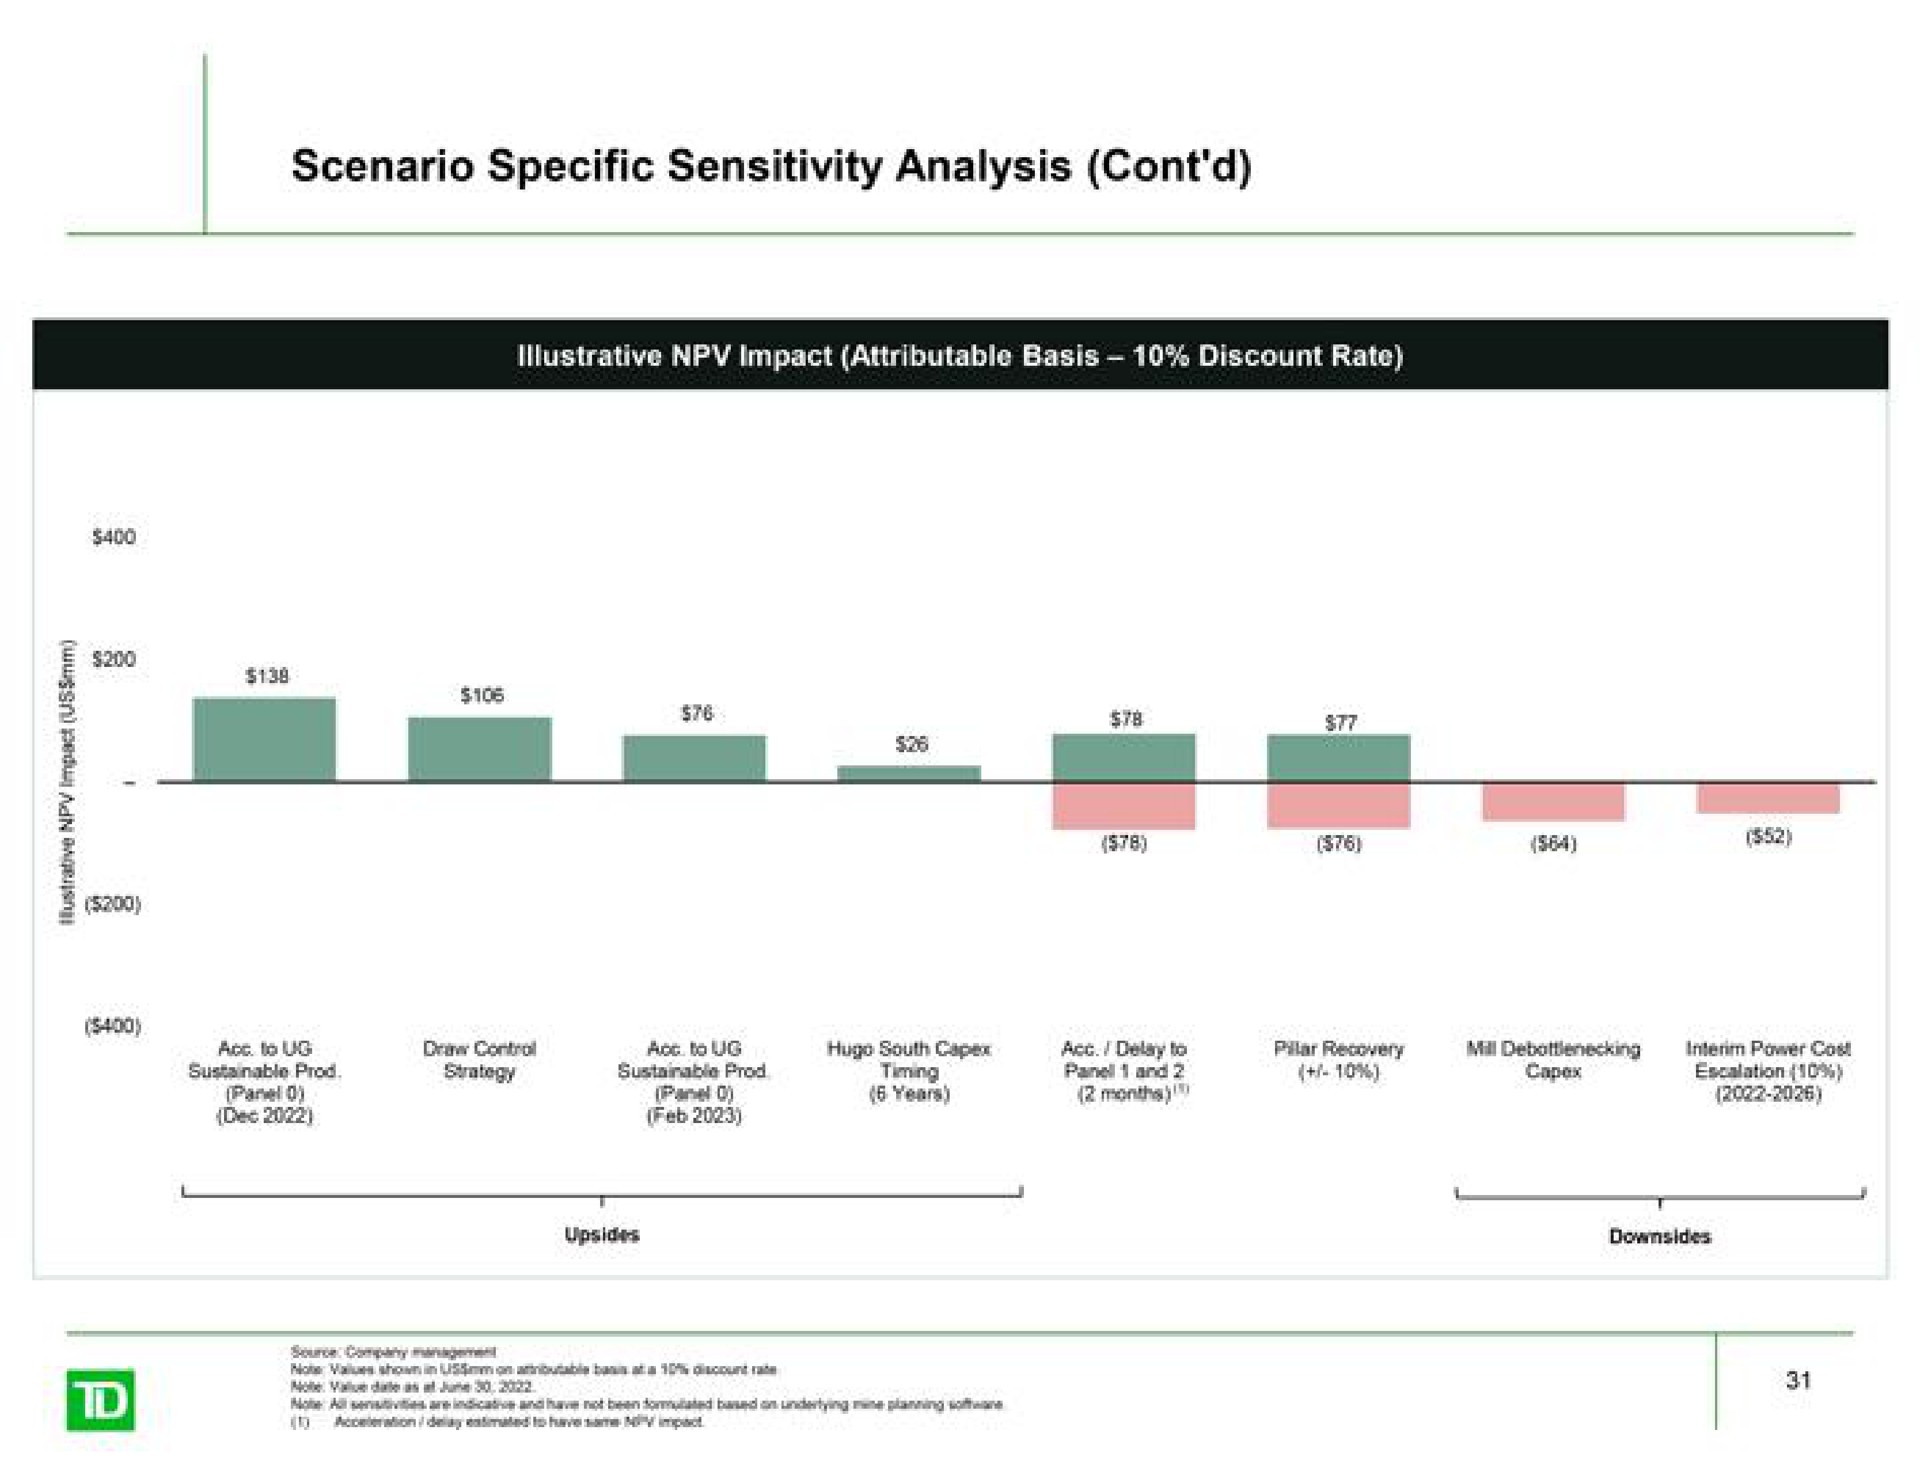 scenario specific sensitivity analysis i | TD Securities